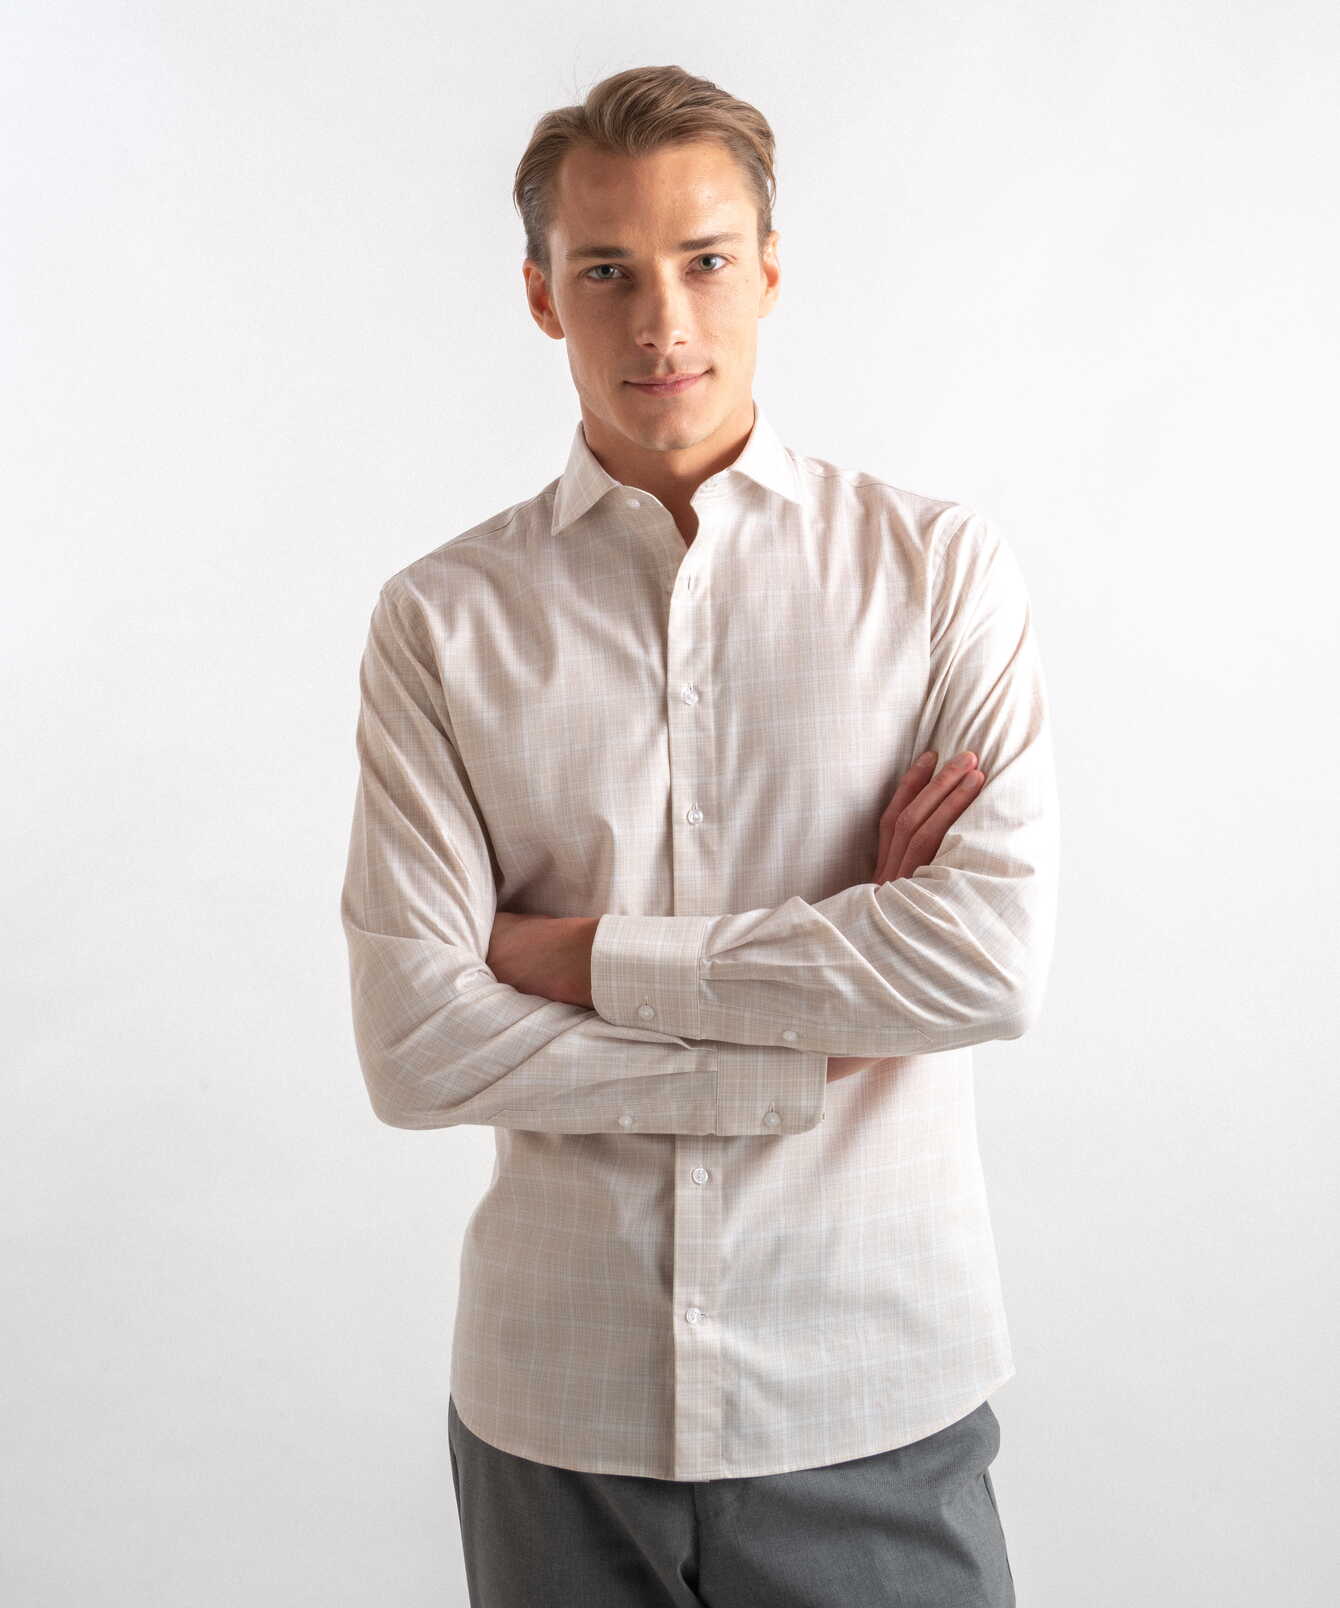 Shirt Munich Beige Easy To Iron Checkered Shirt Extra Long Sleeve The Shirt Factory